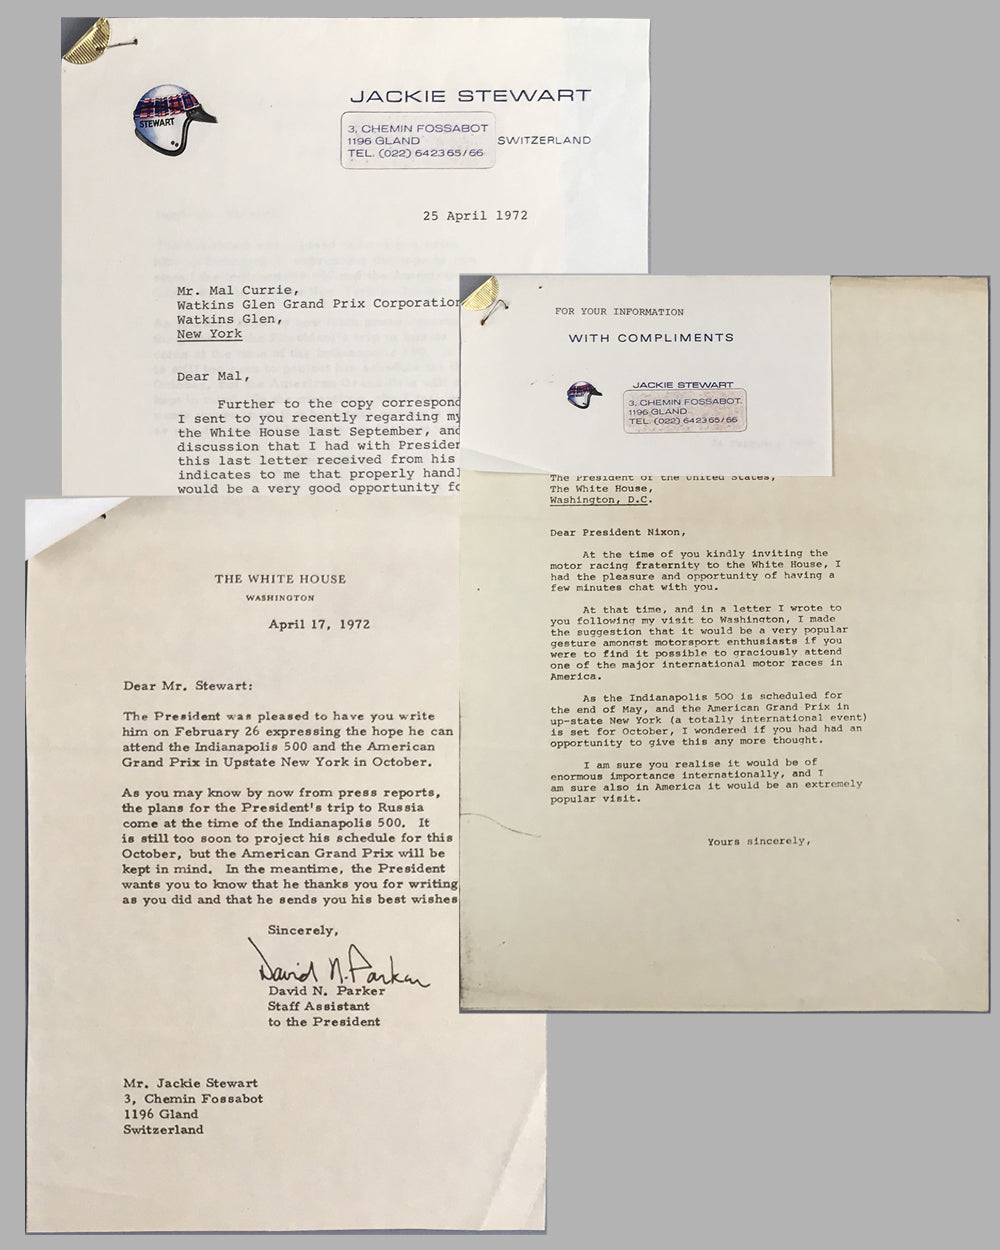 Set of 3 letters between Jackie Stewart, Malcolm Currie (Director of Watkins Glen G.P. Corporation) and President Nixon